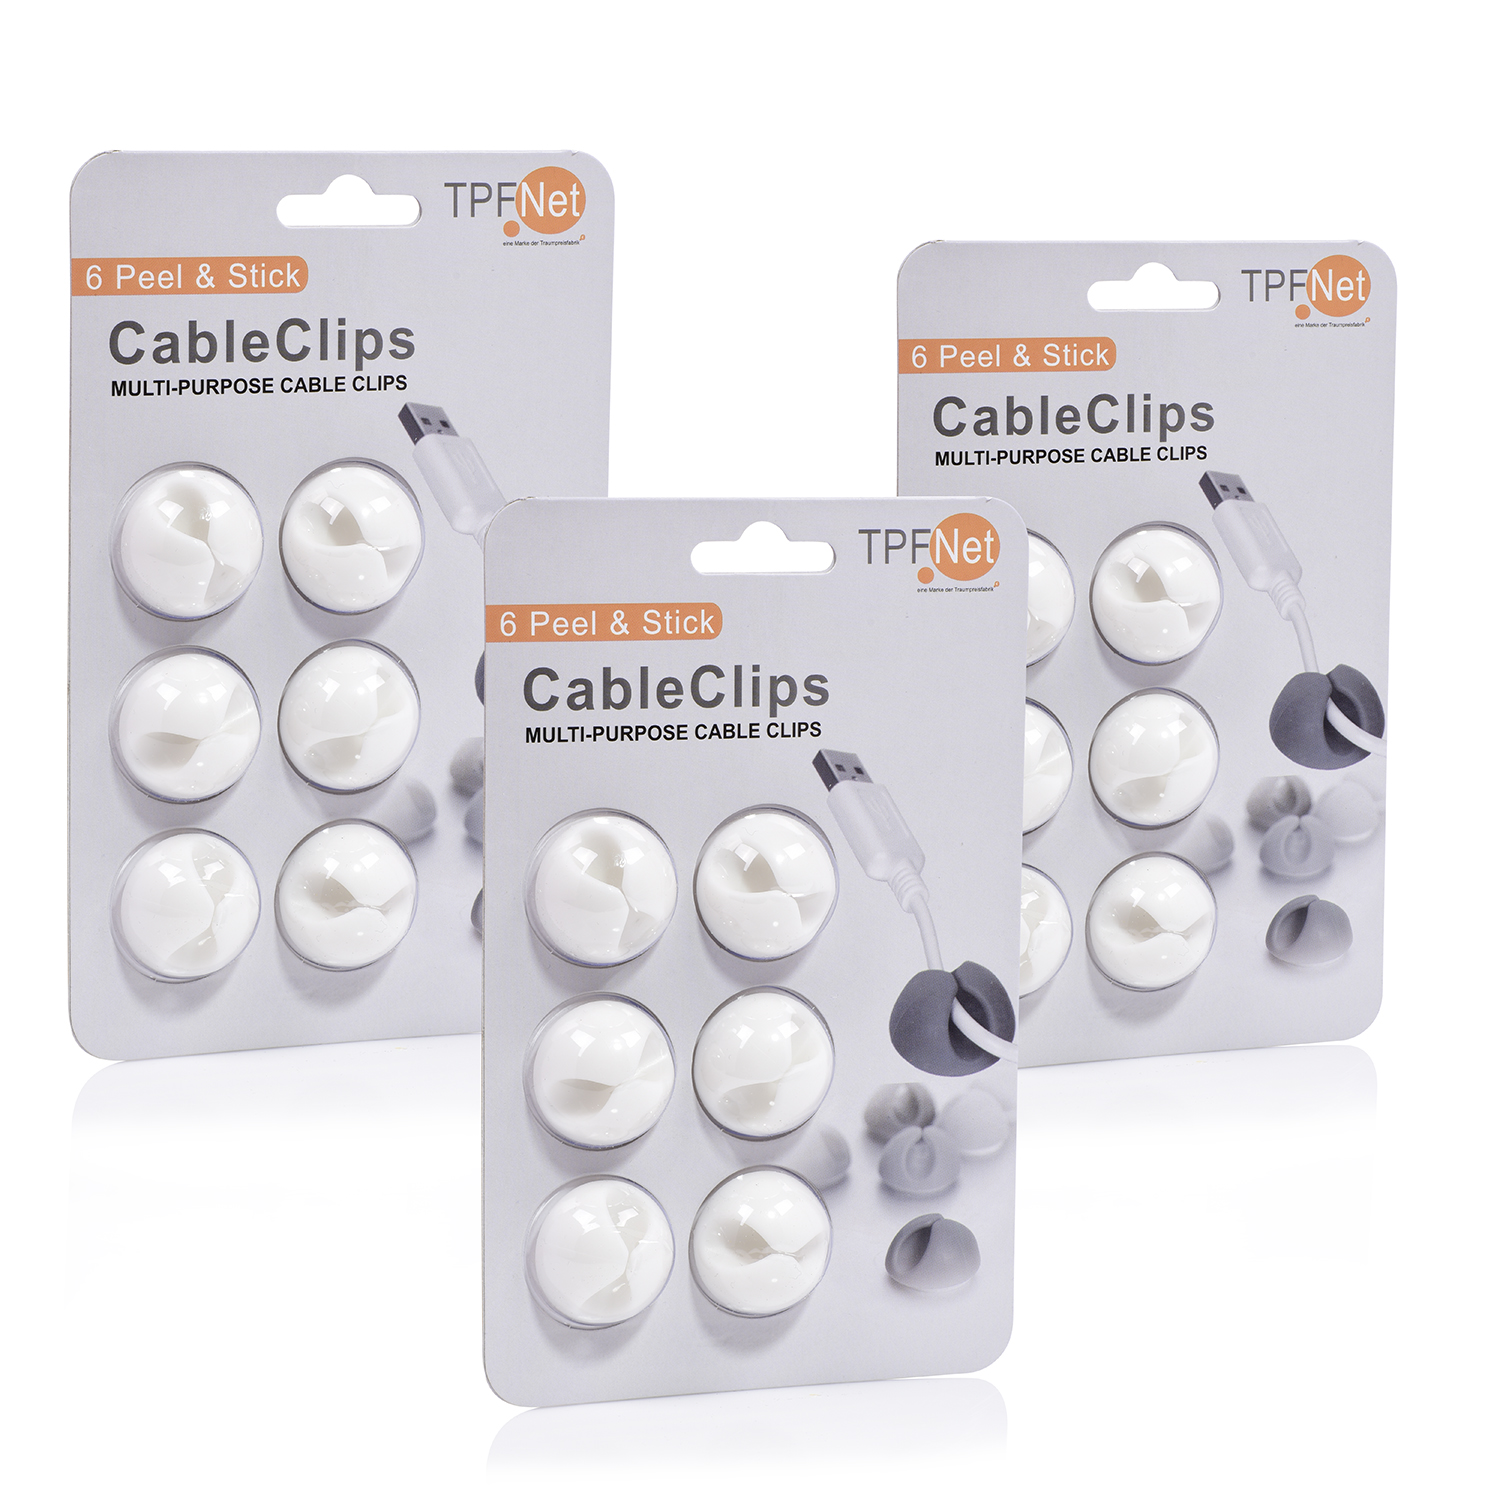 TPFNET 3er Pack Cable Cable 3x6 Clip, Weiß Stück, weiß Clip Premium